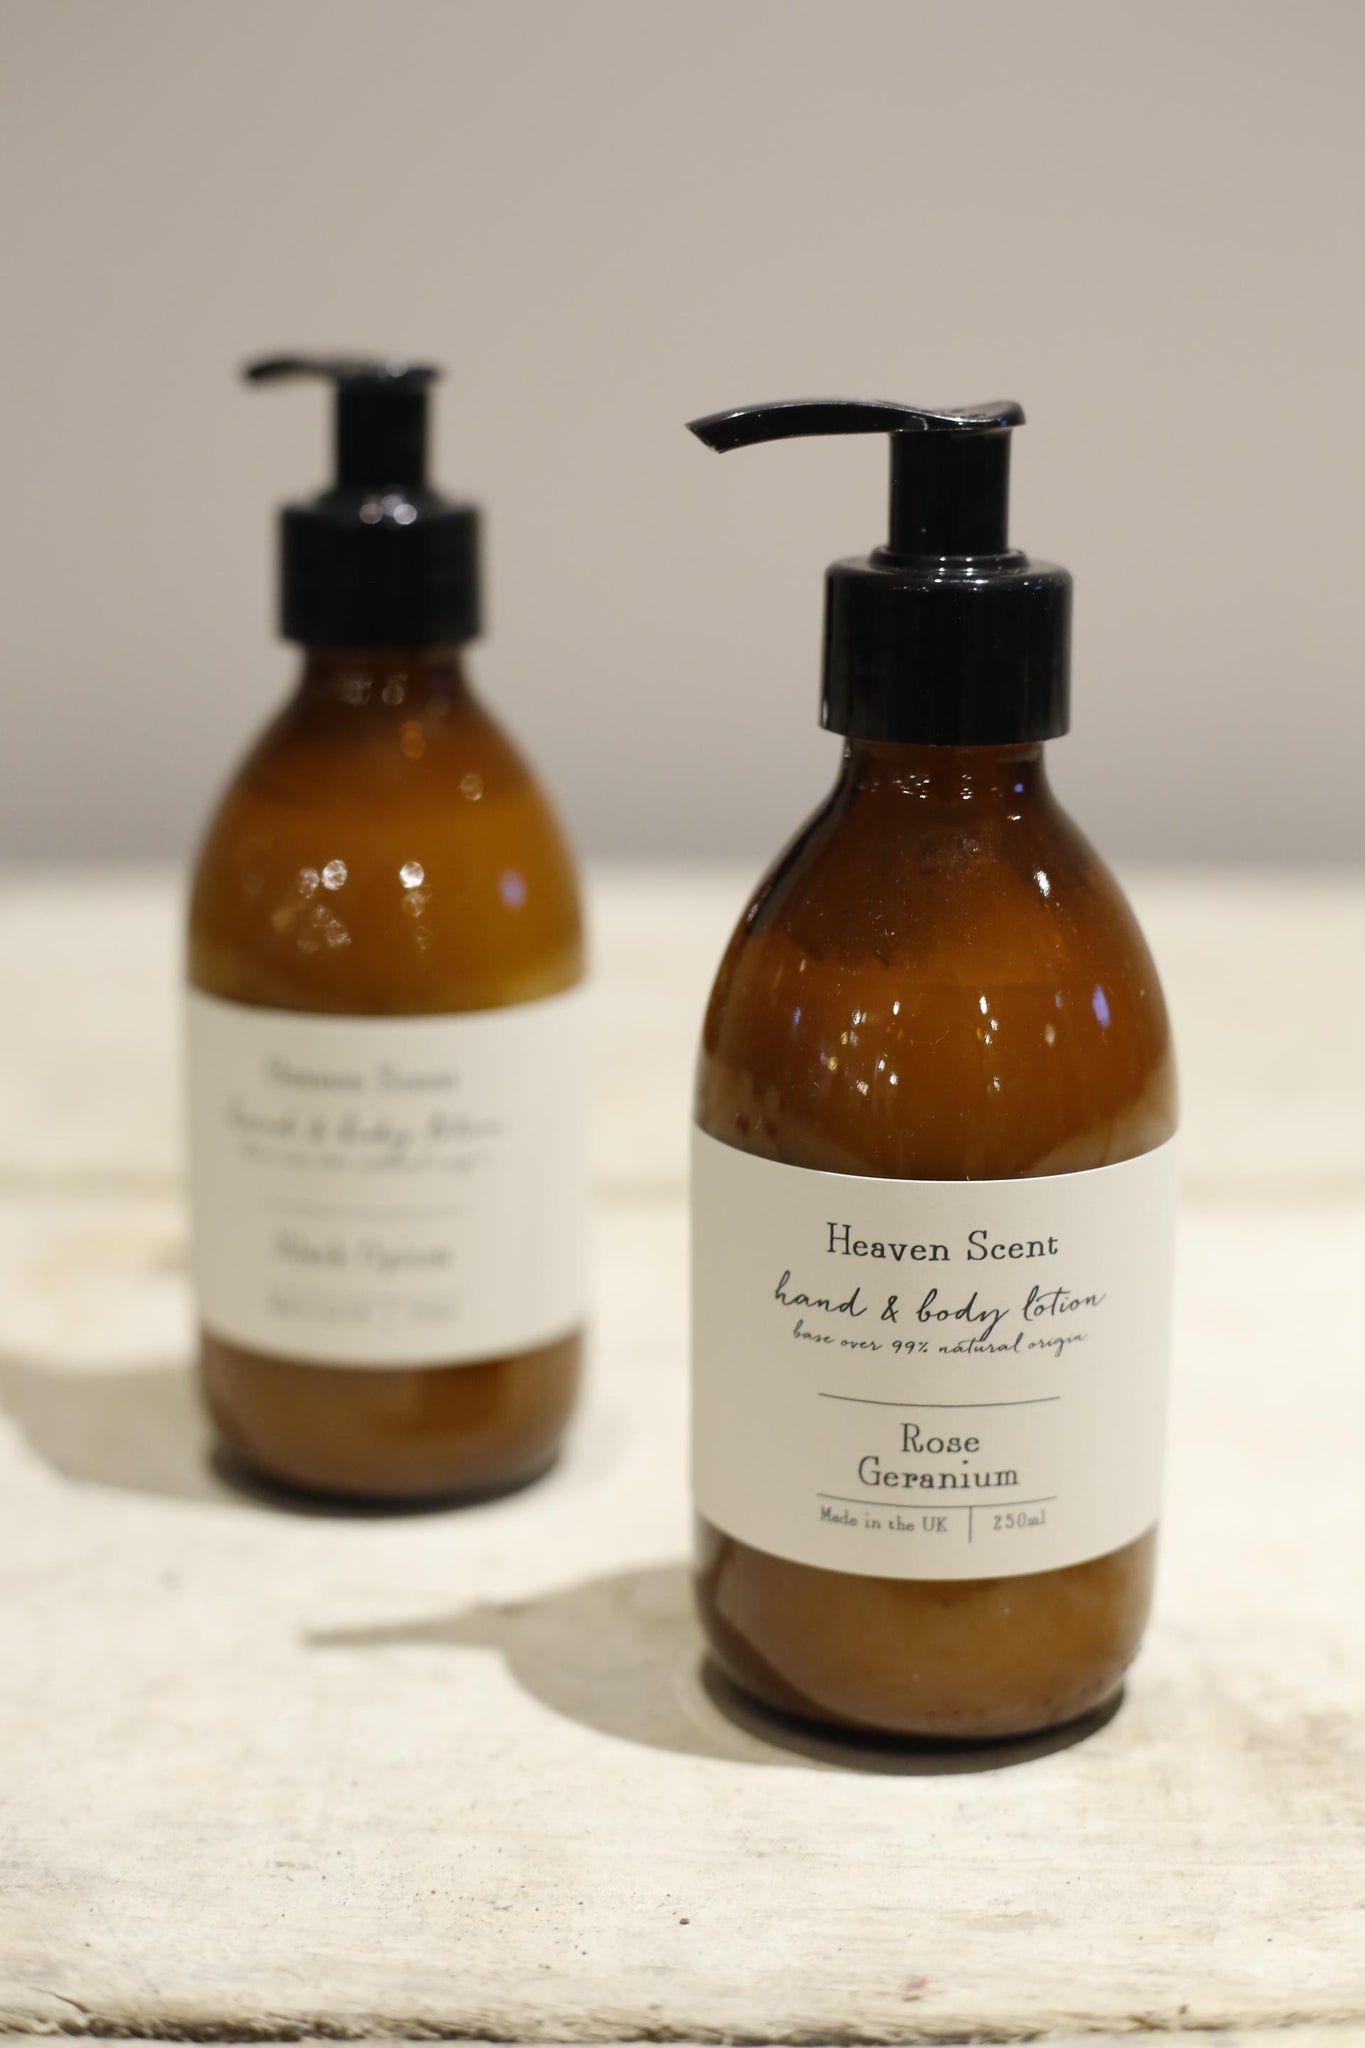 Heaven scent hand & body wash - Rose Geranium 250ml